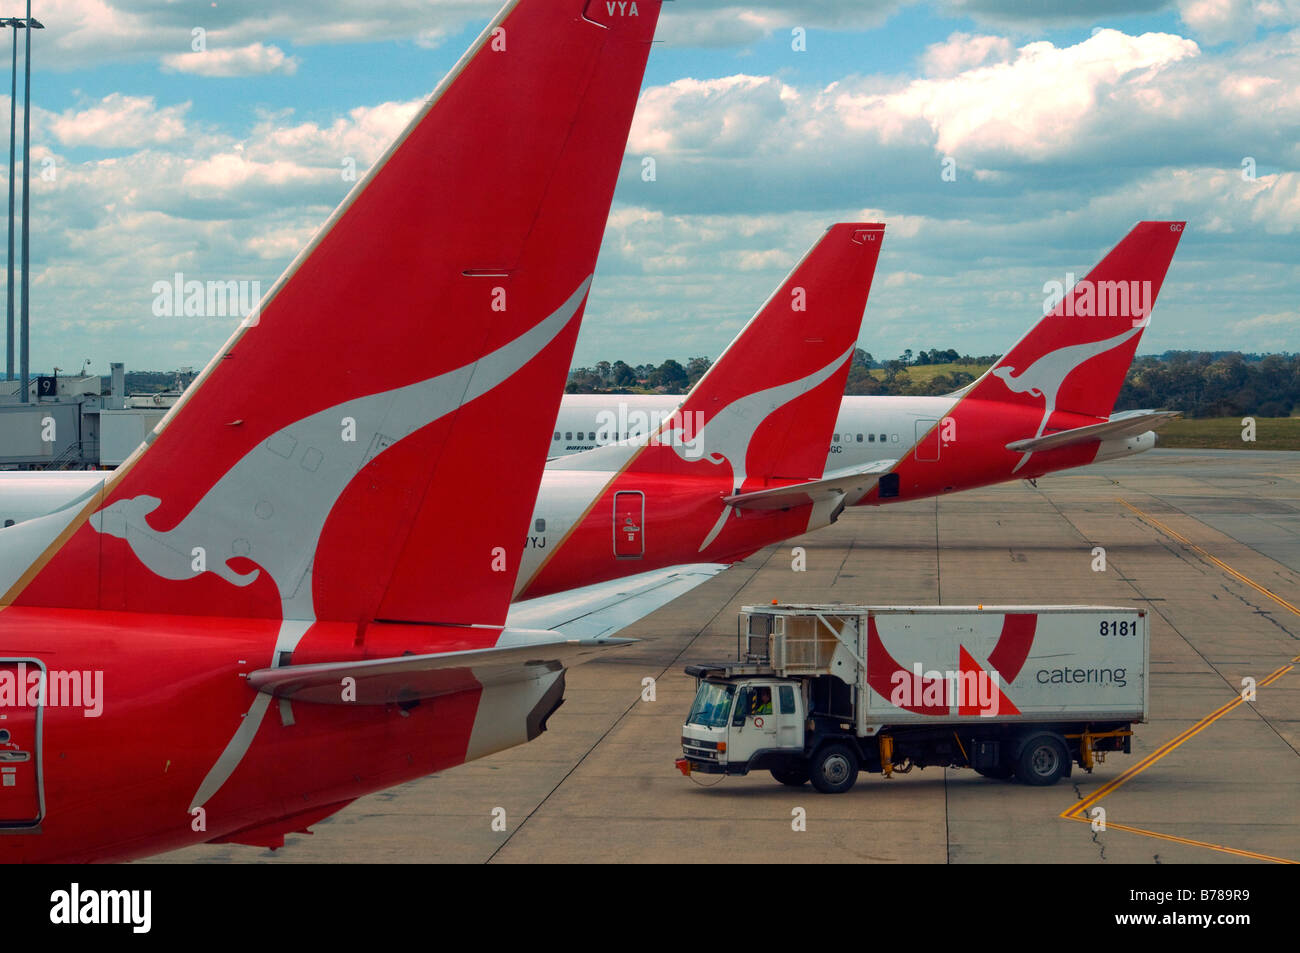 Catering van servicing Qantas Boeing jets at Tullamarine Melbourne Airport Stock Photo